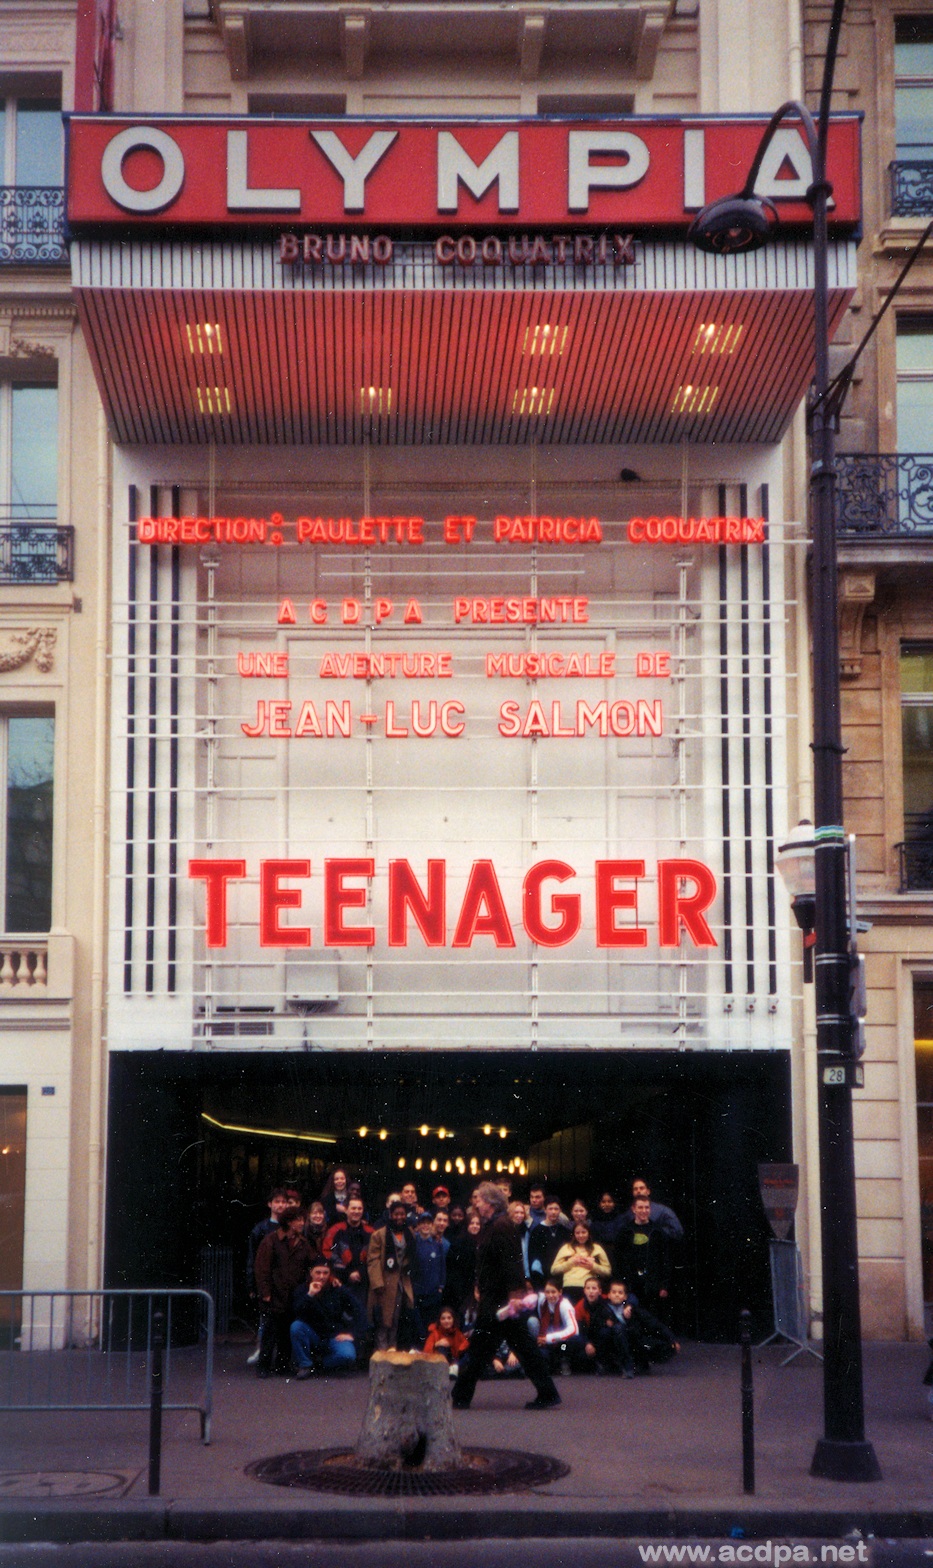 La troupe "Teenager" devant l'Olympia